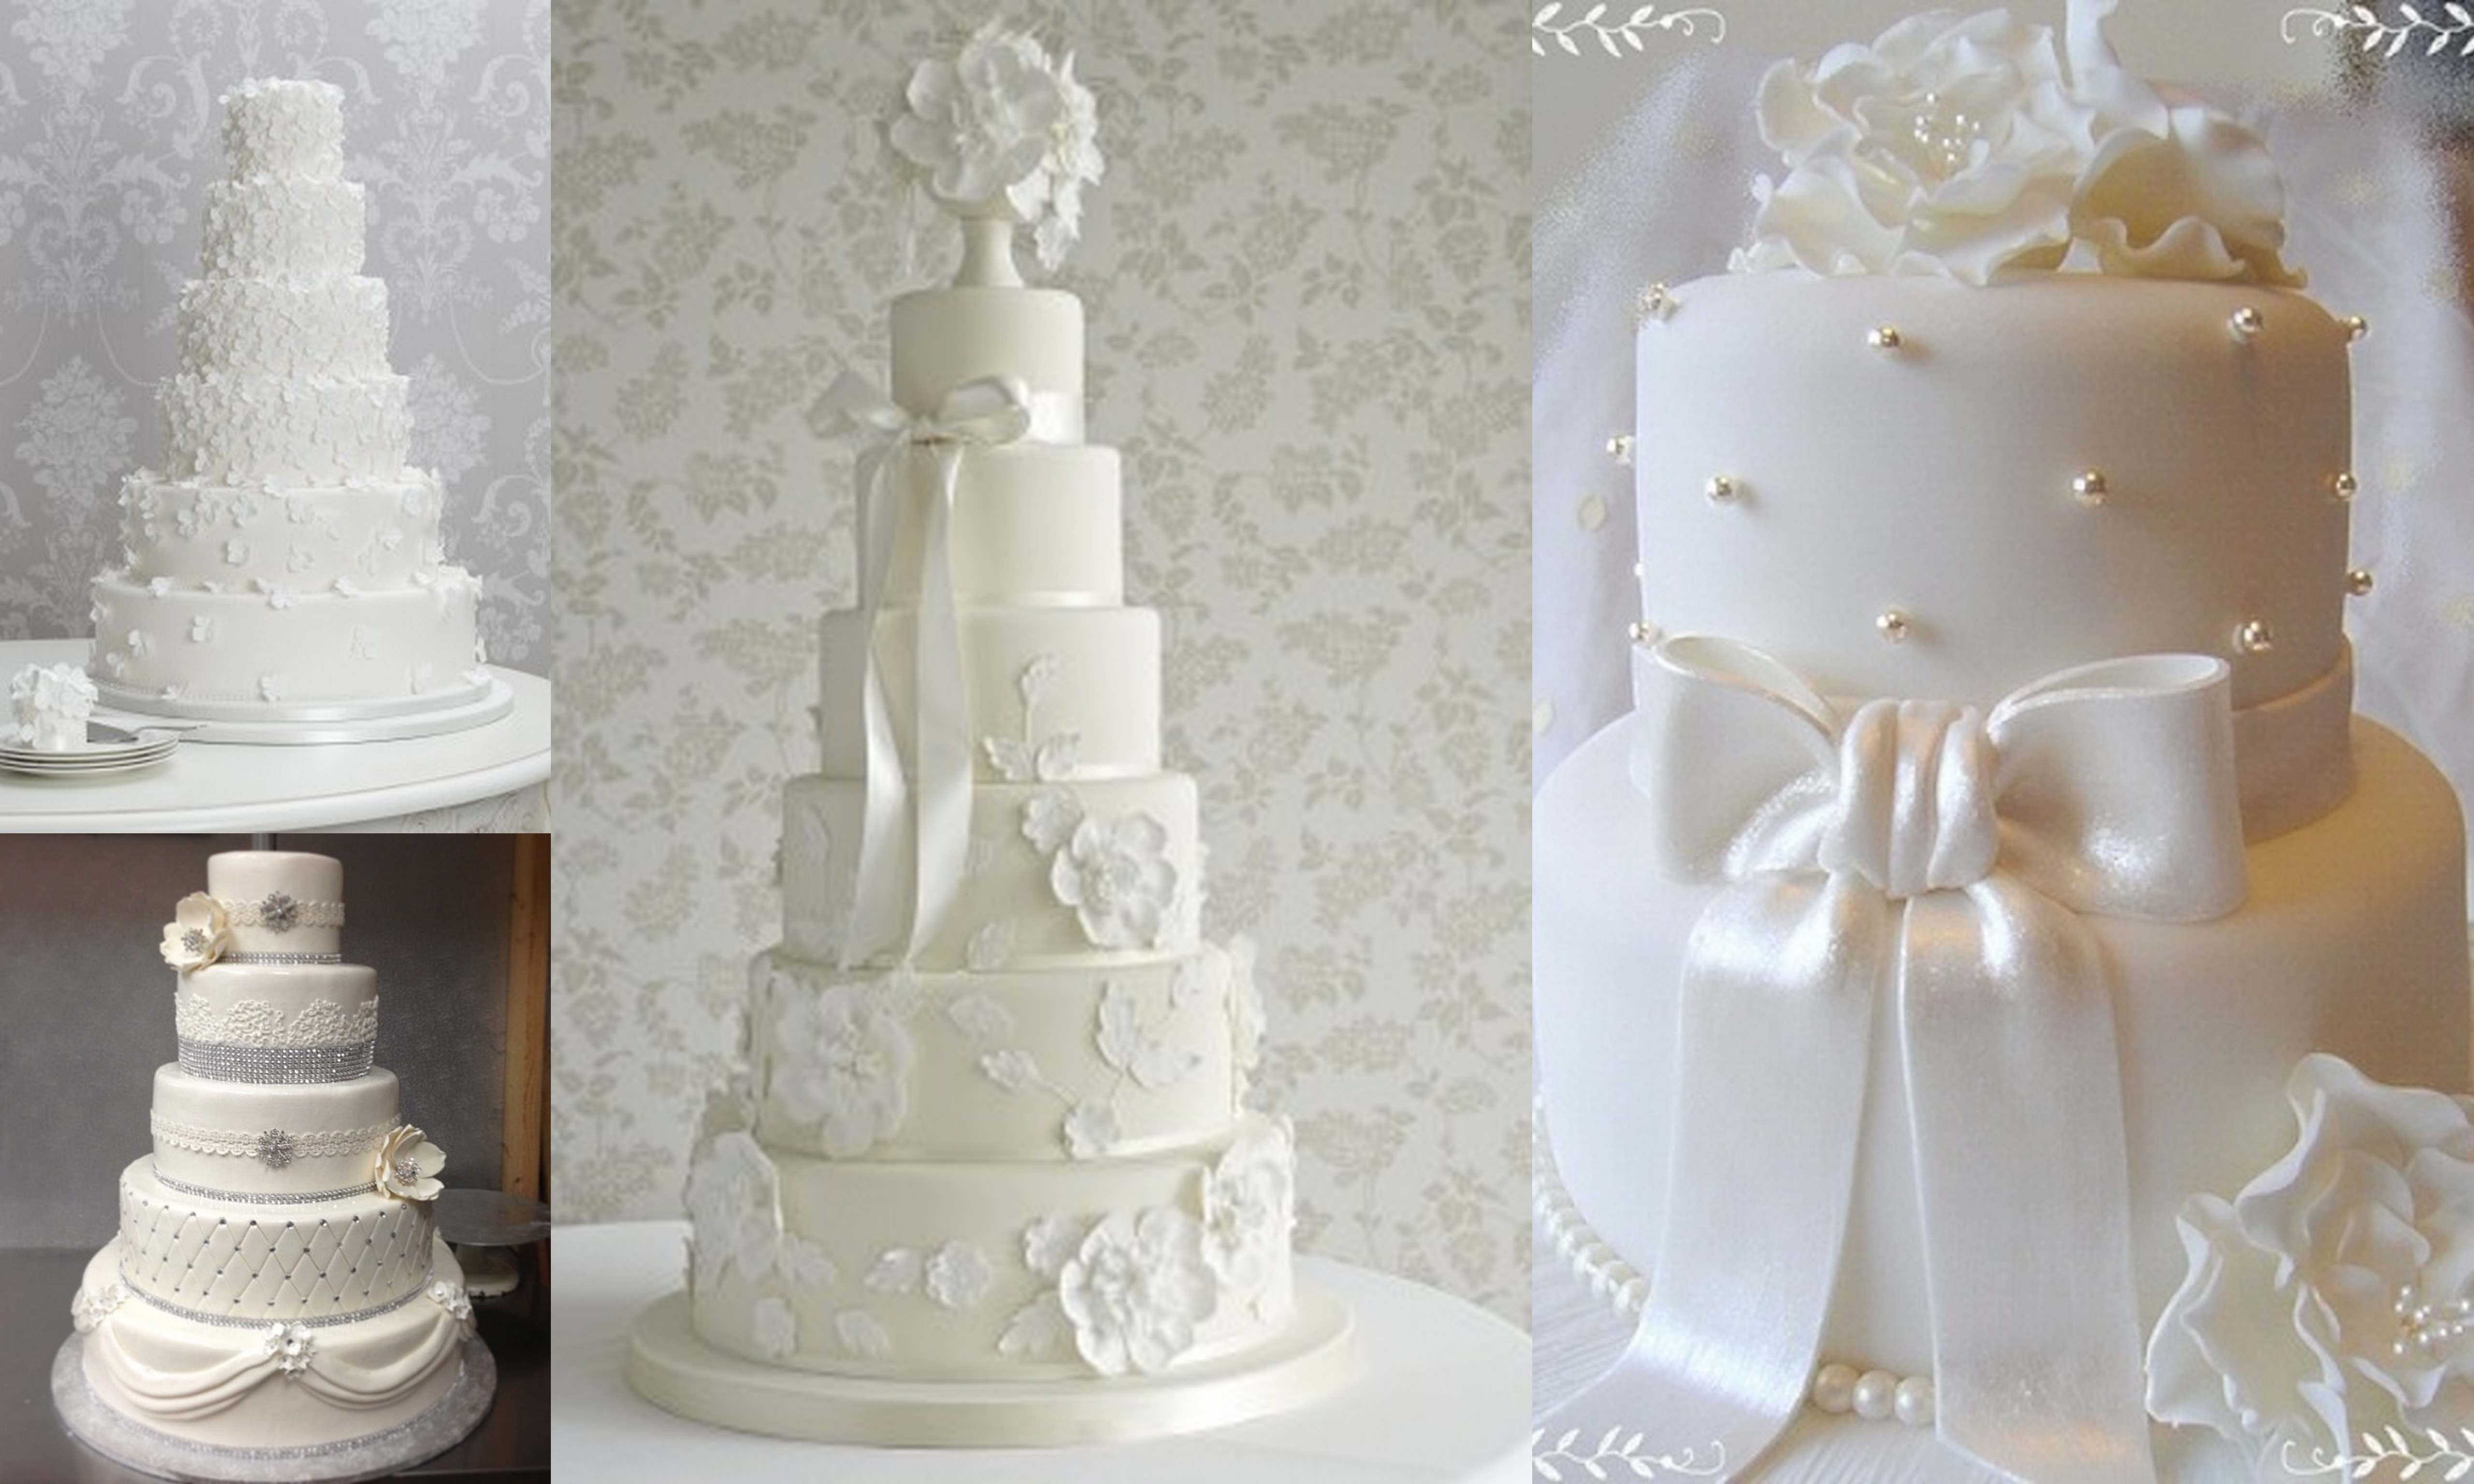 In style wedding cake